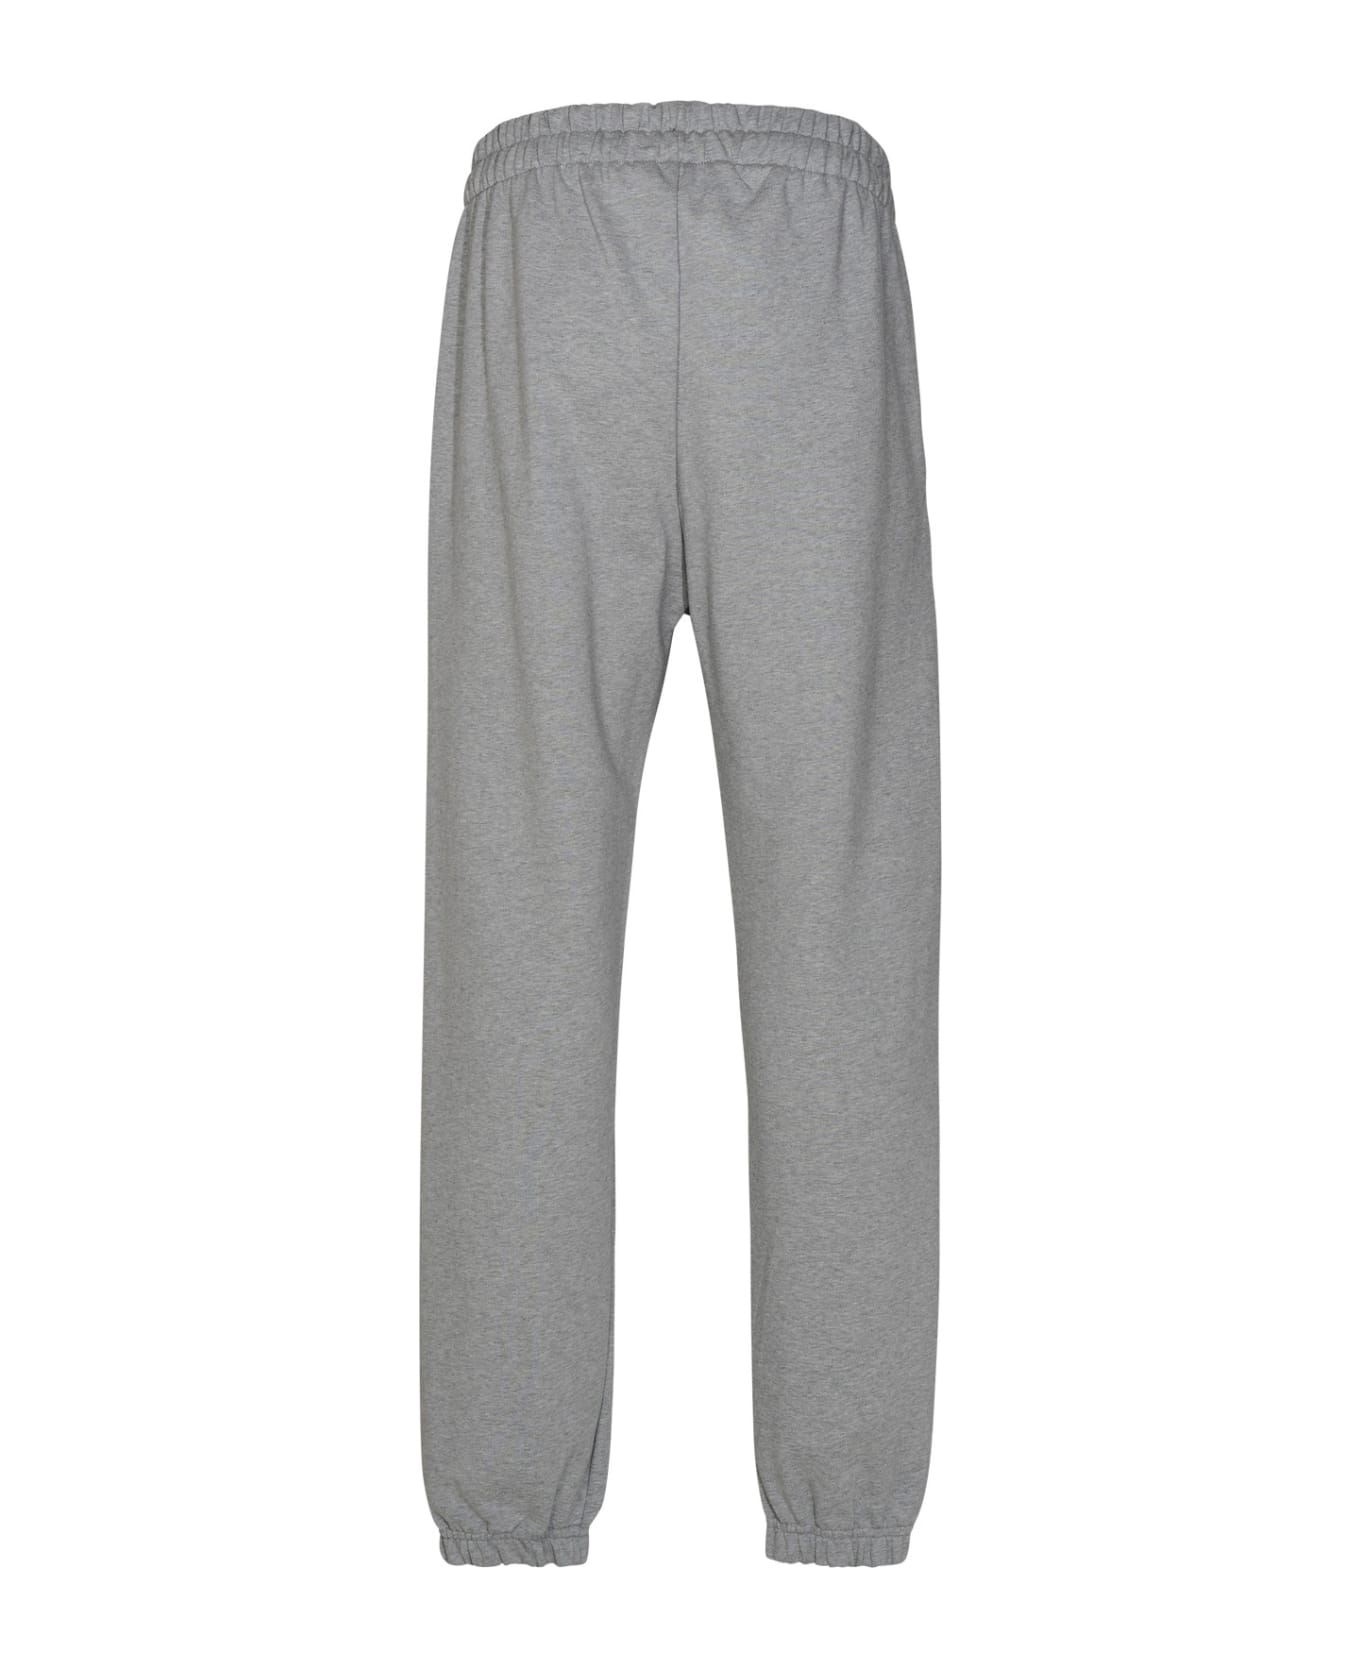 GCDS Grey Cotton Track Pants - Grey